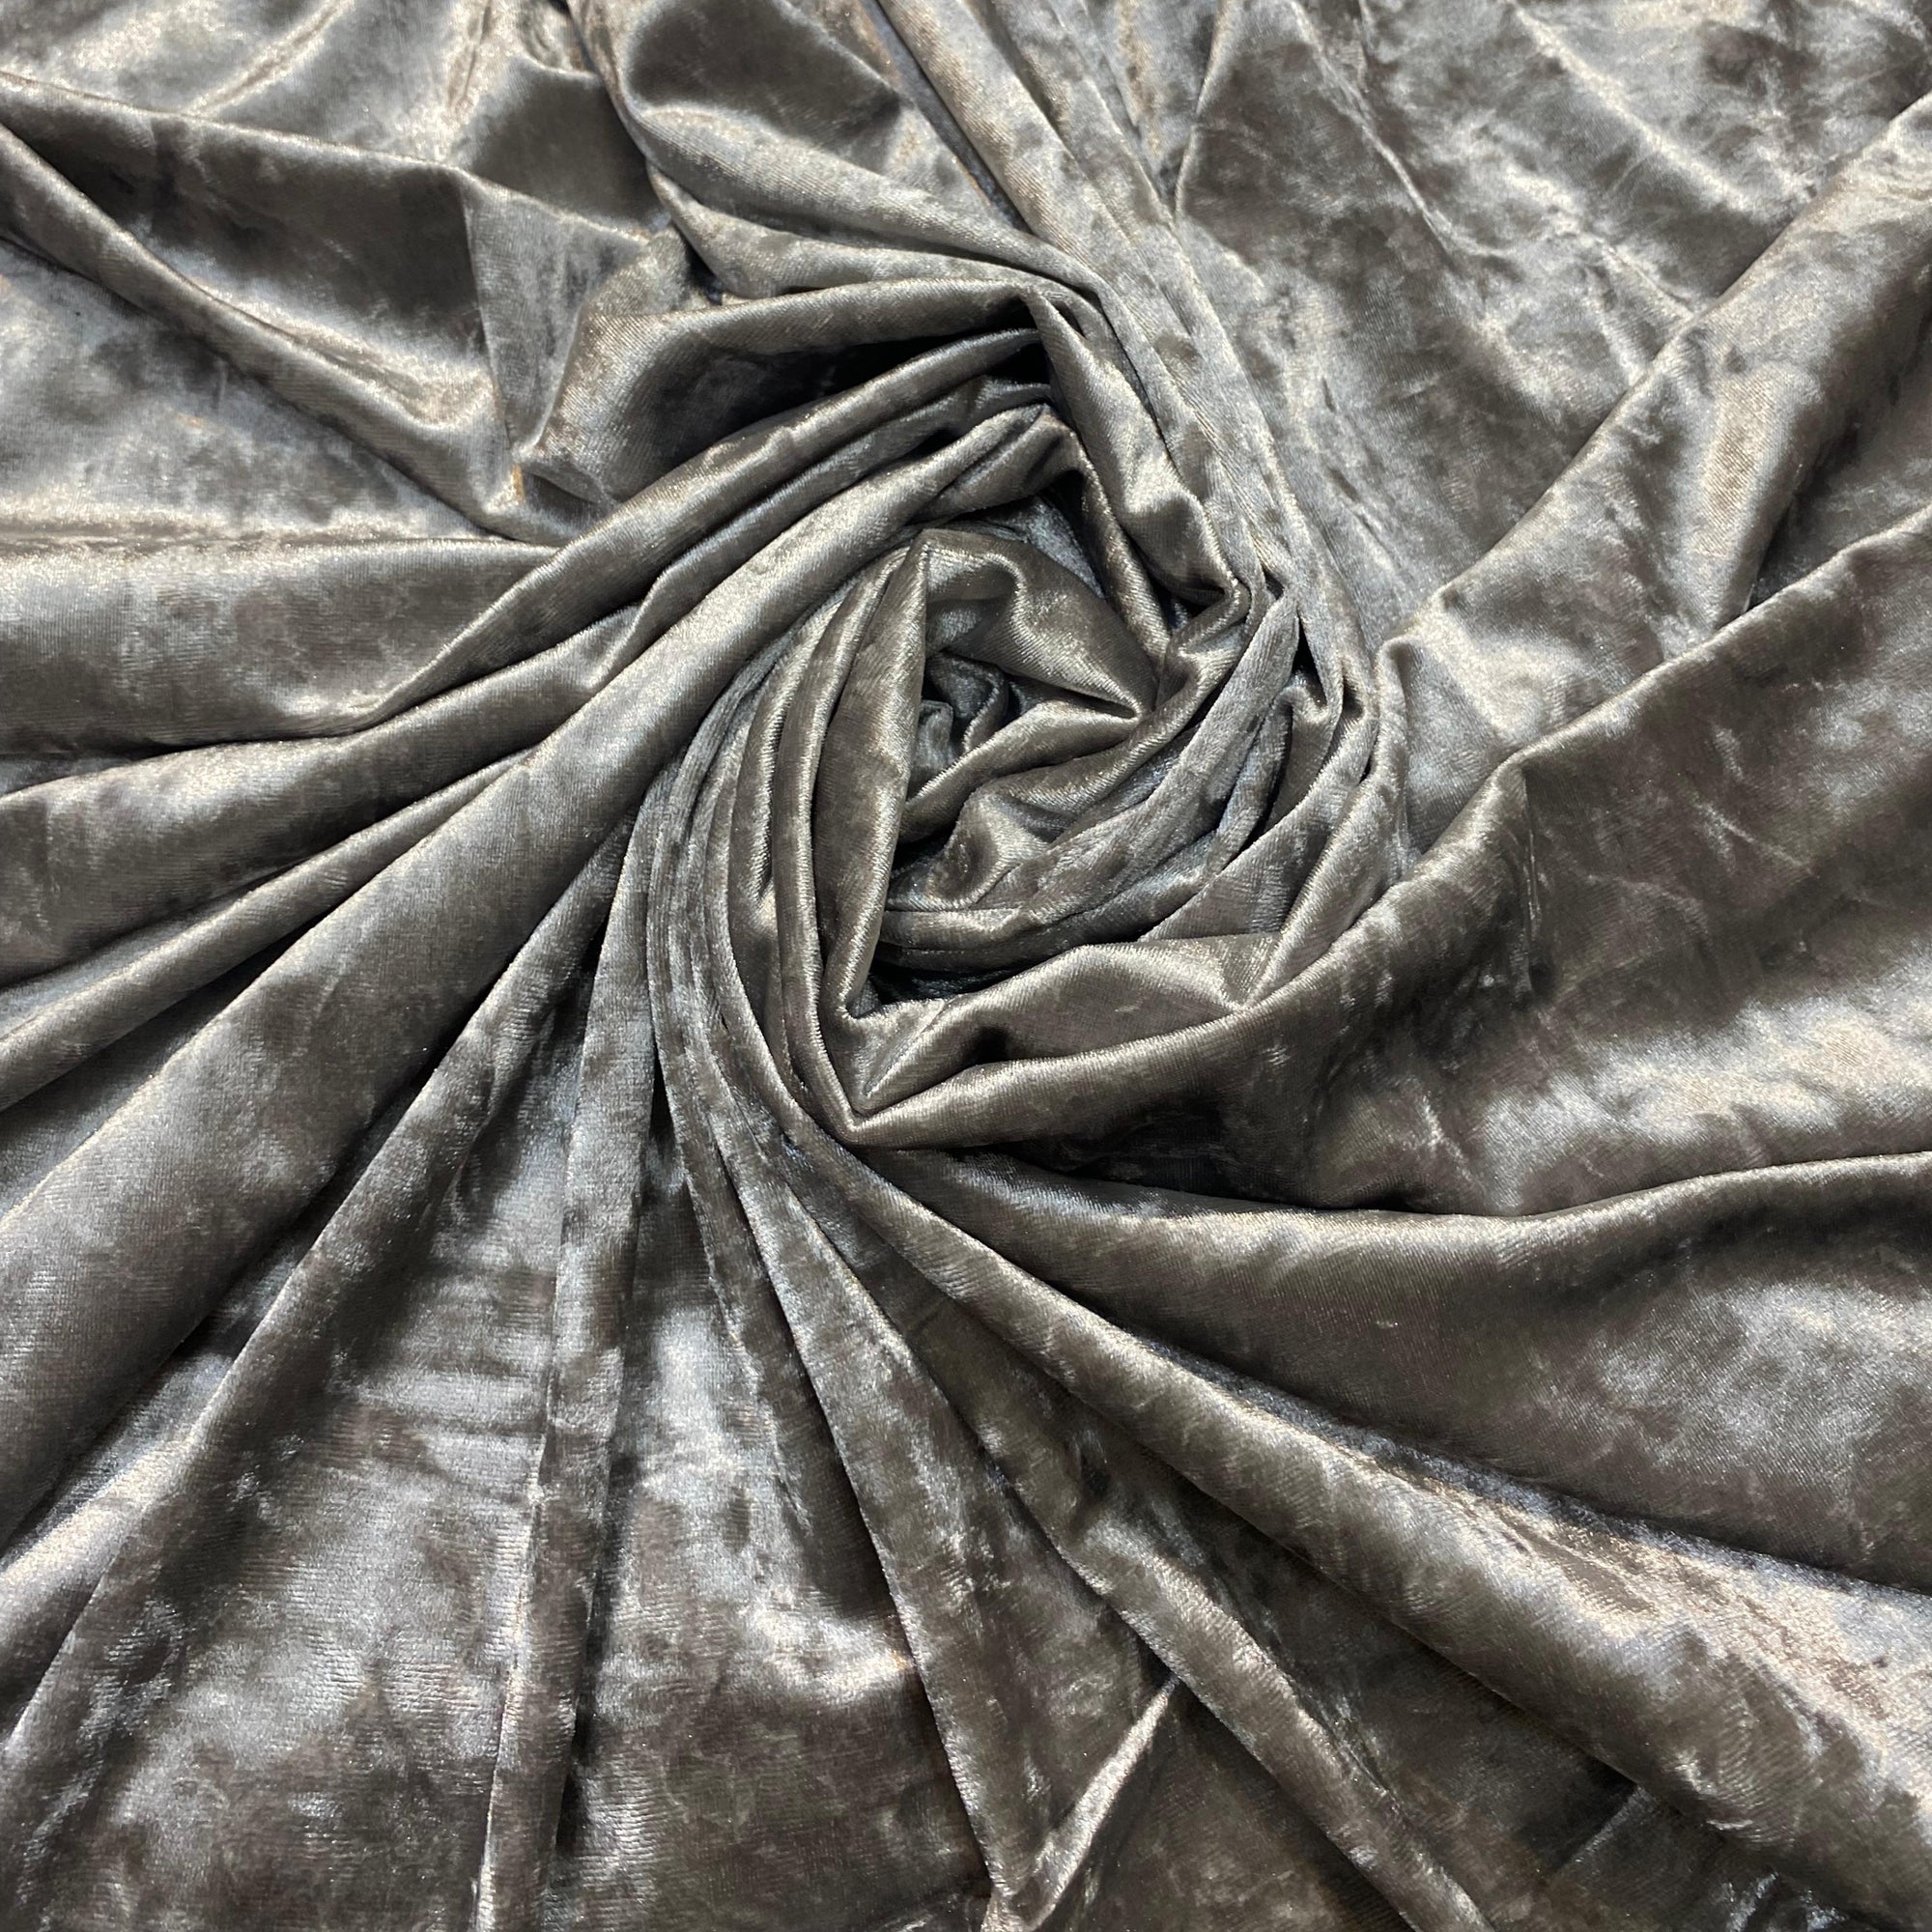 Grey Premium Velvet Fabric, Grey Upholstery Fabric